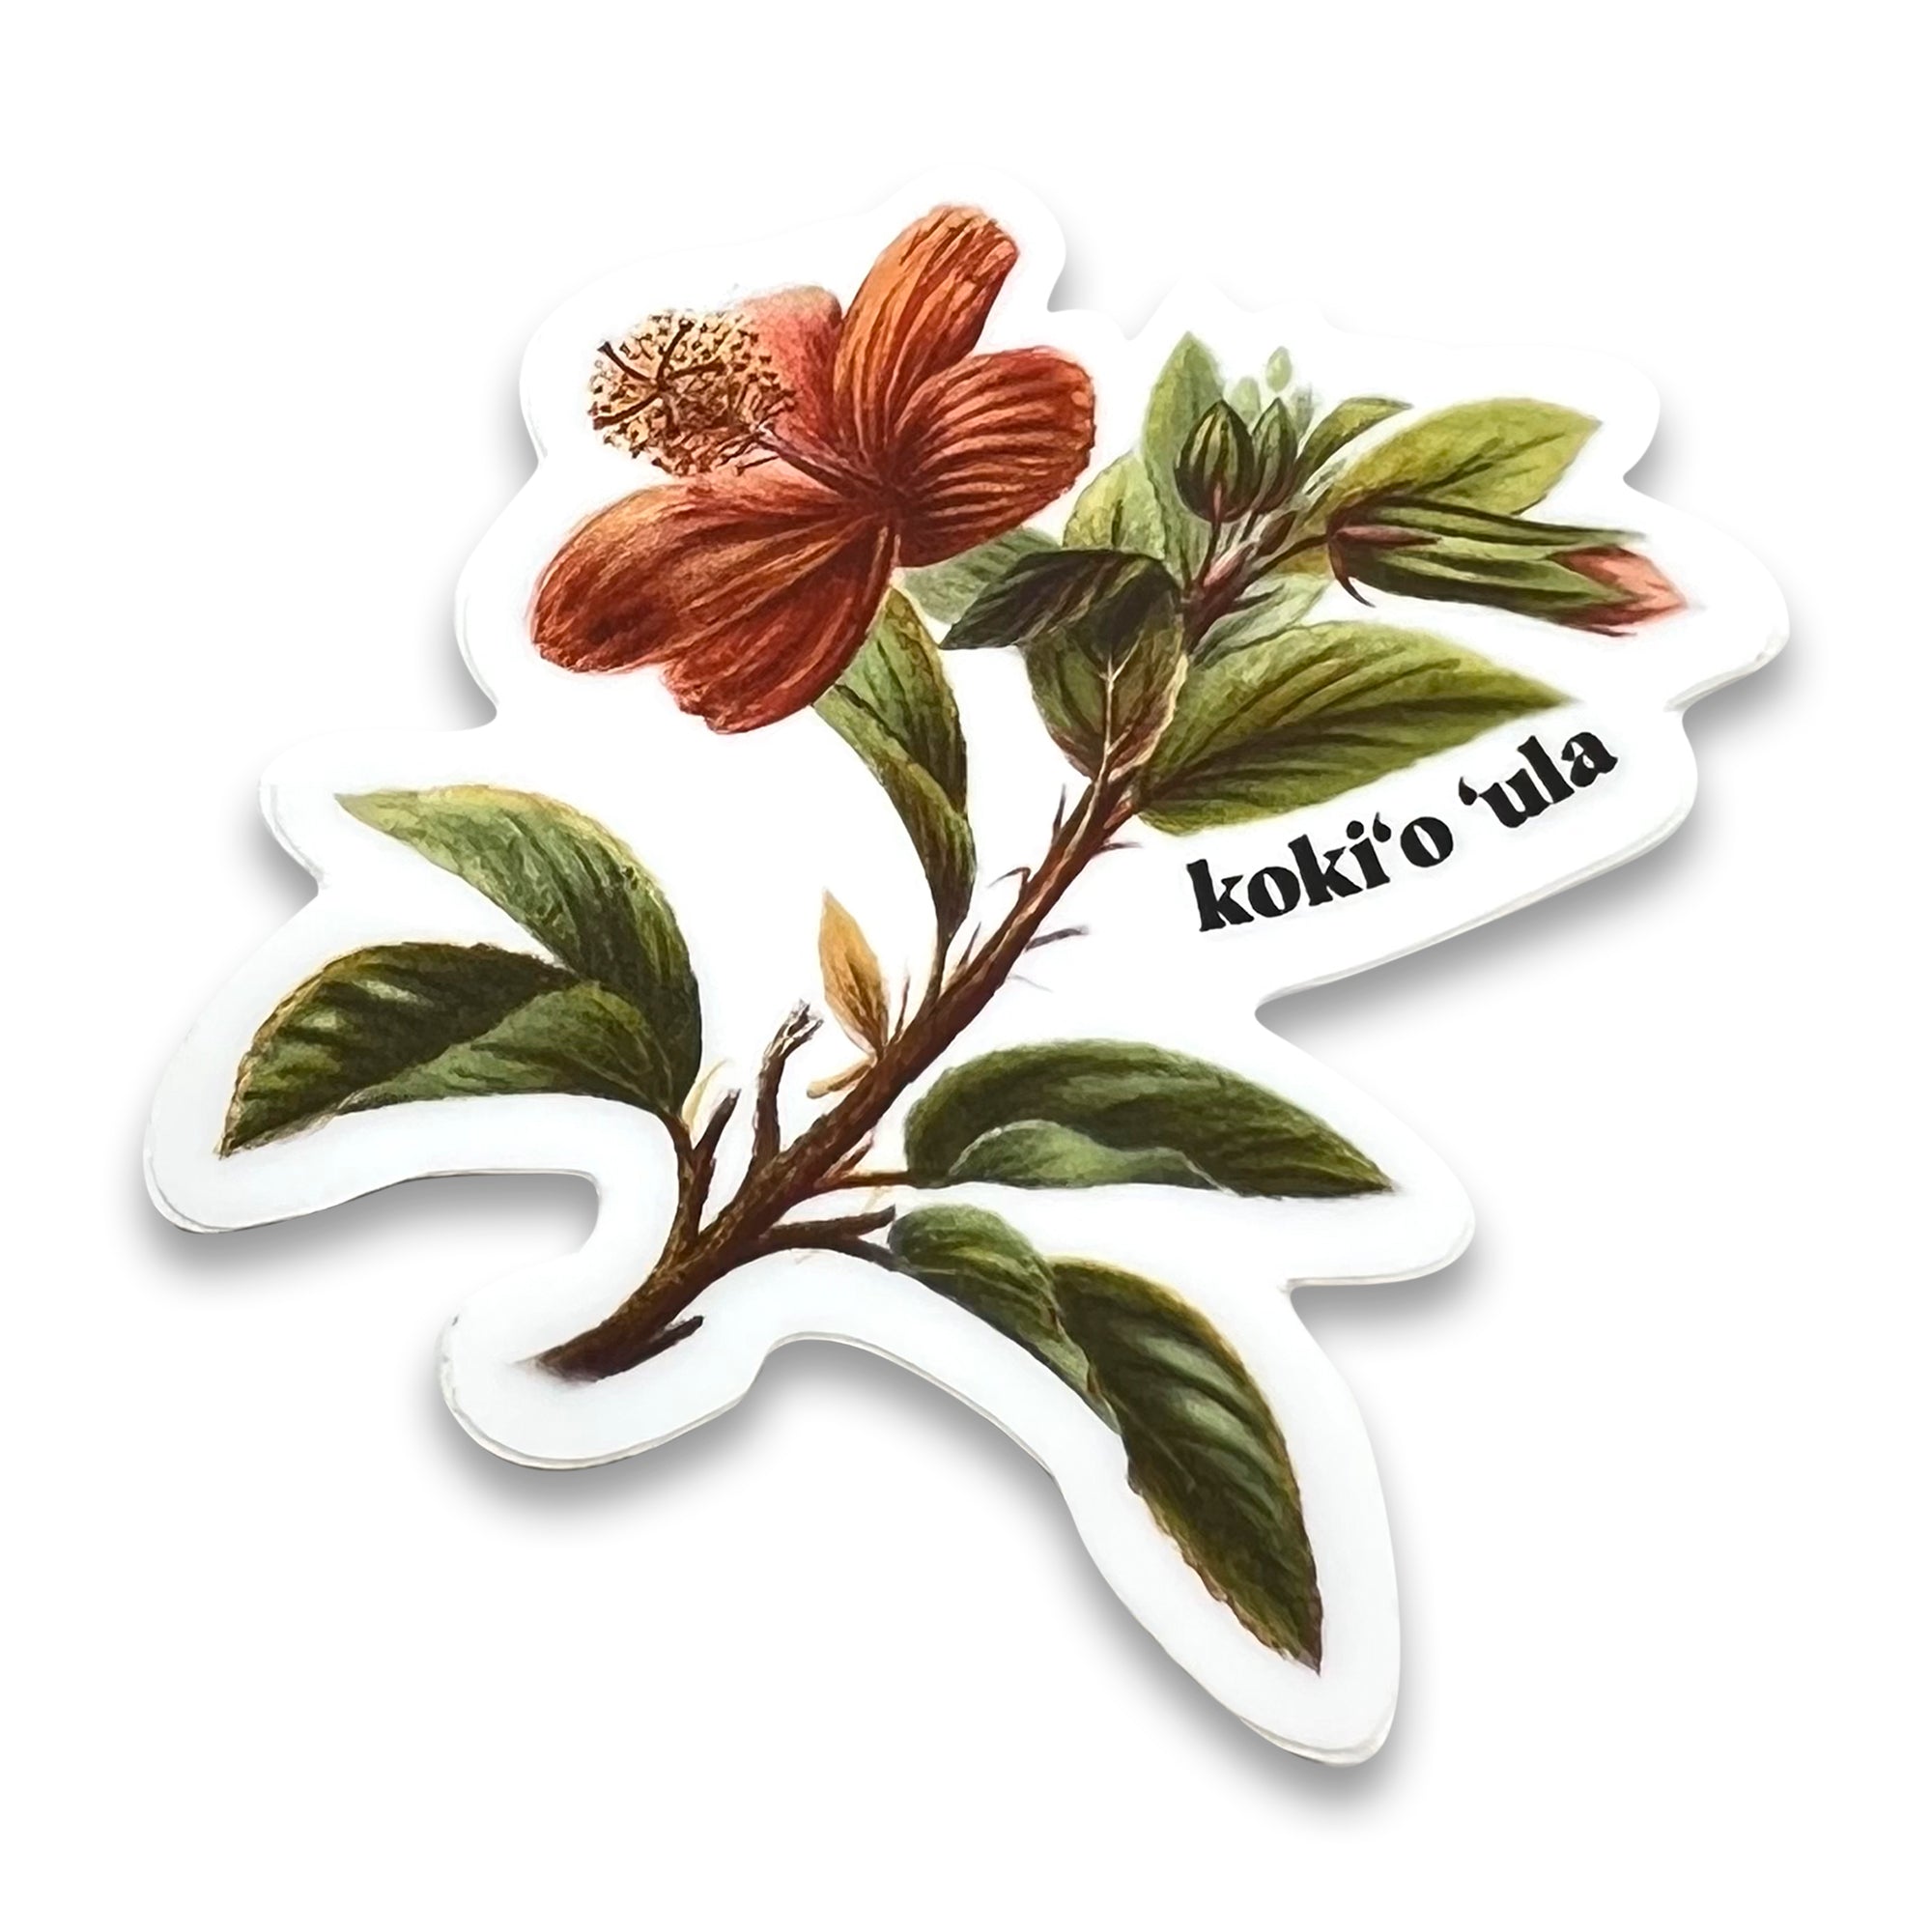 Pop-Up Mākeke - Laulima Hawai'i - Native Pua Sticker Pack - Koki'o 'Ula